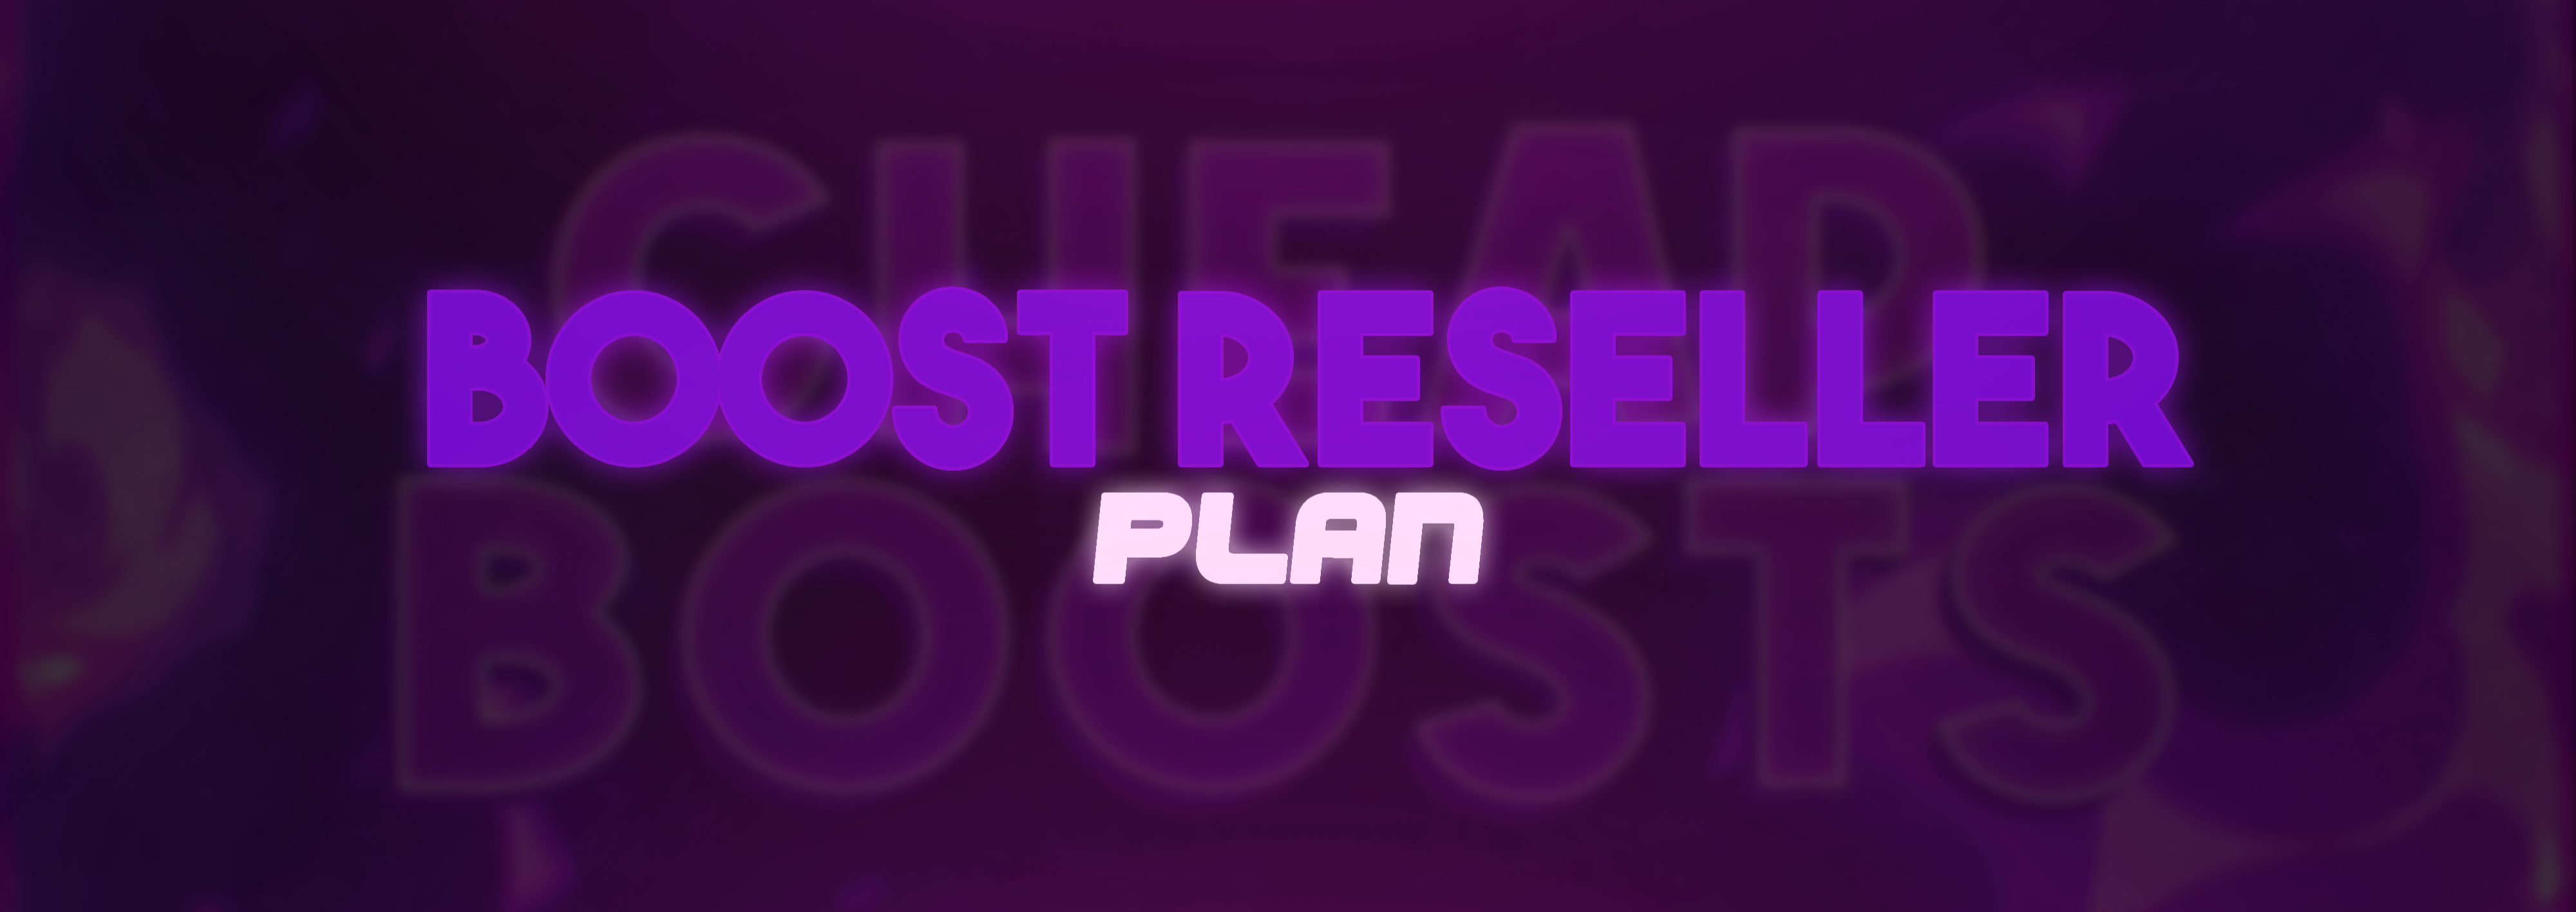 Boost Reseller Plan